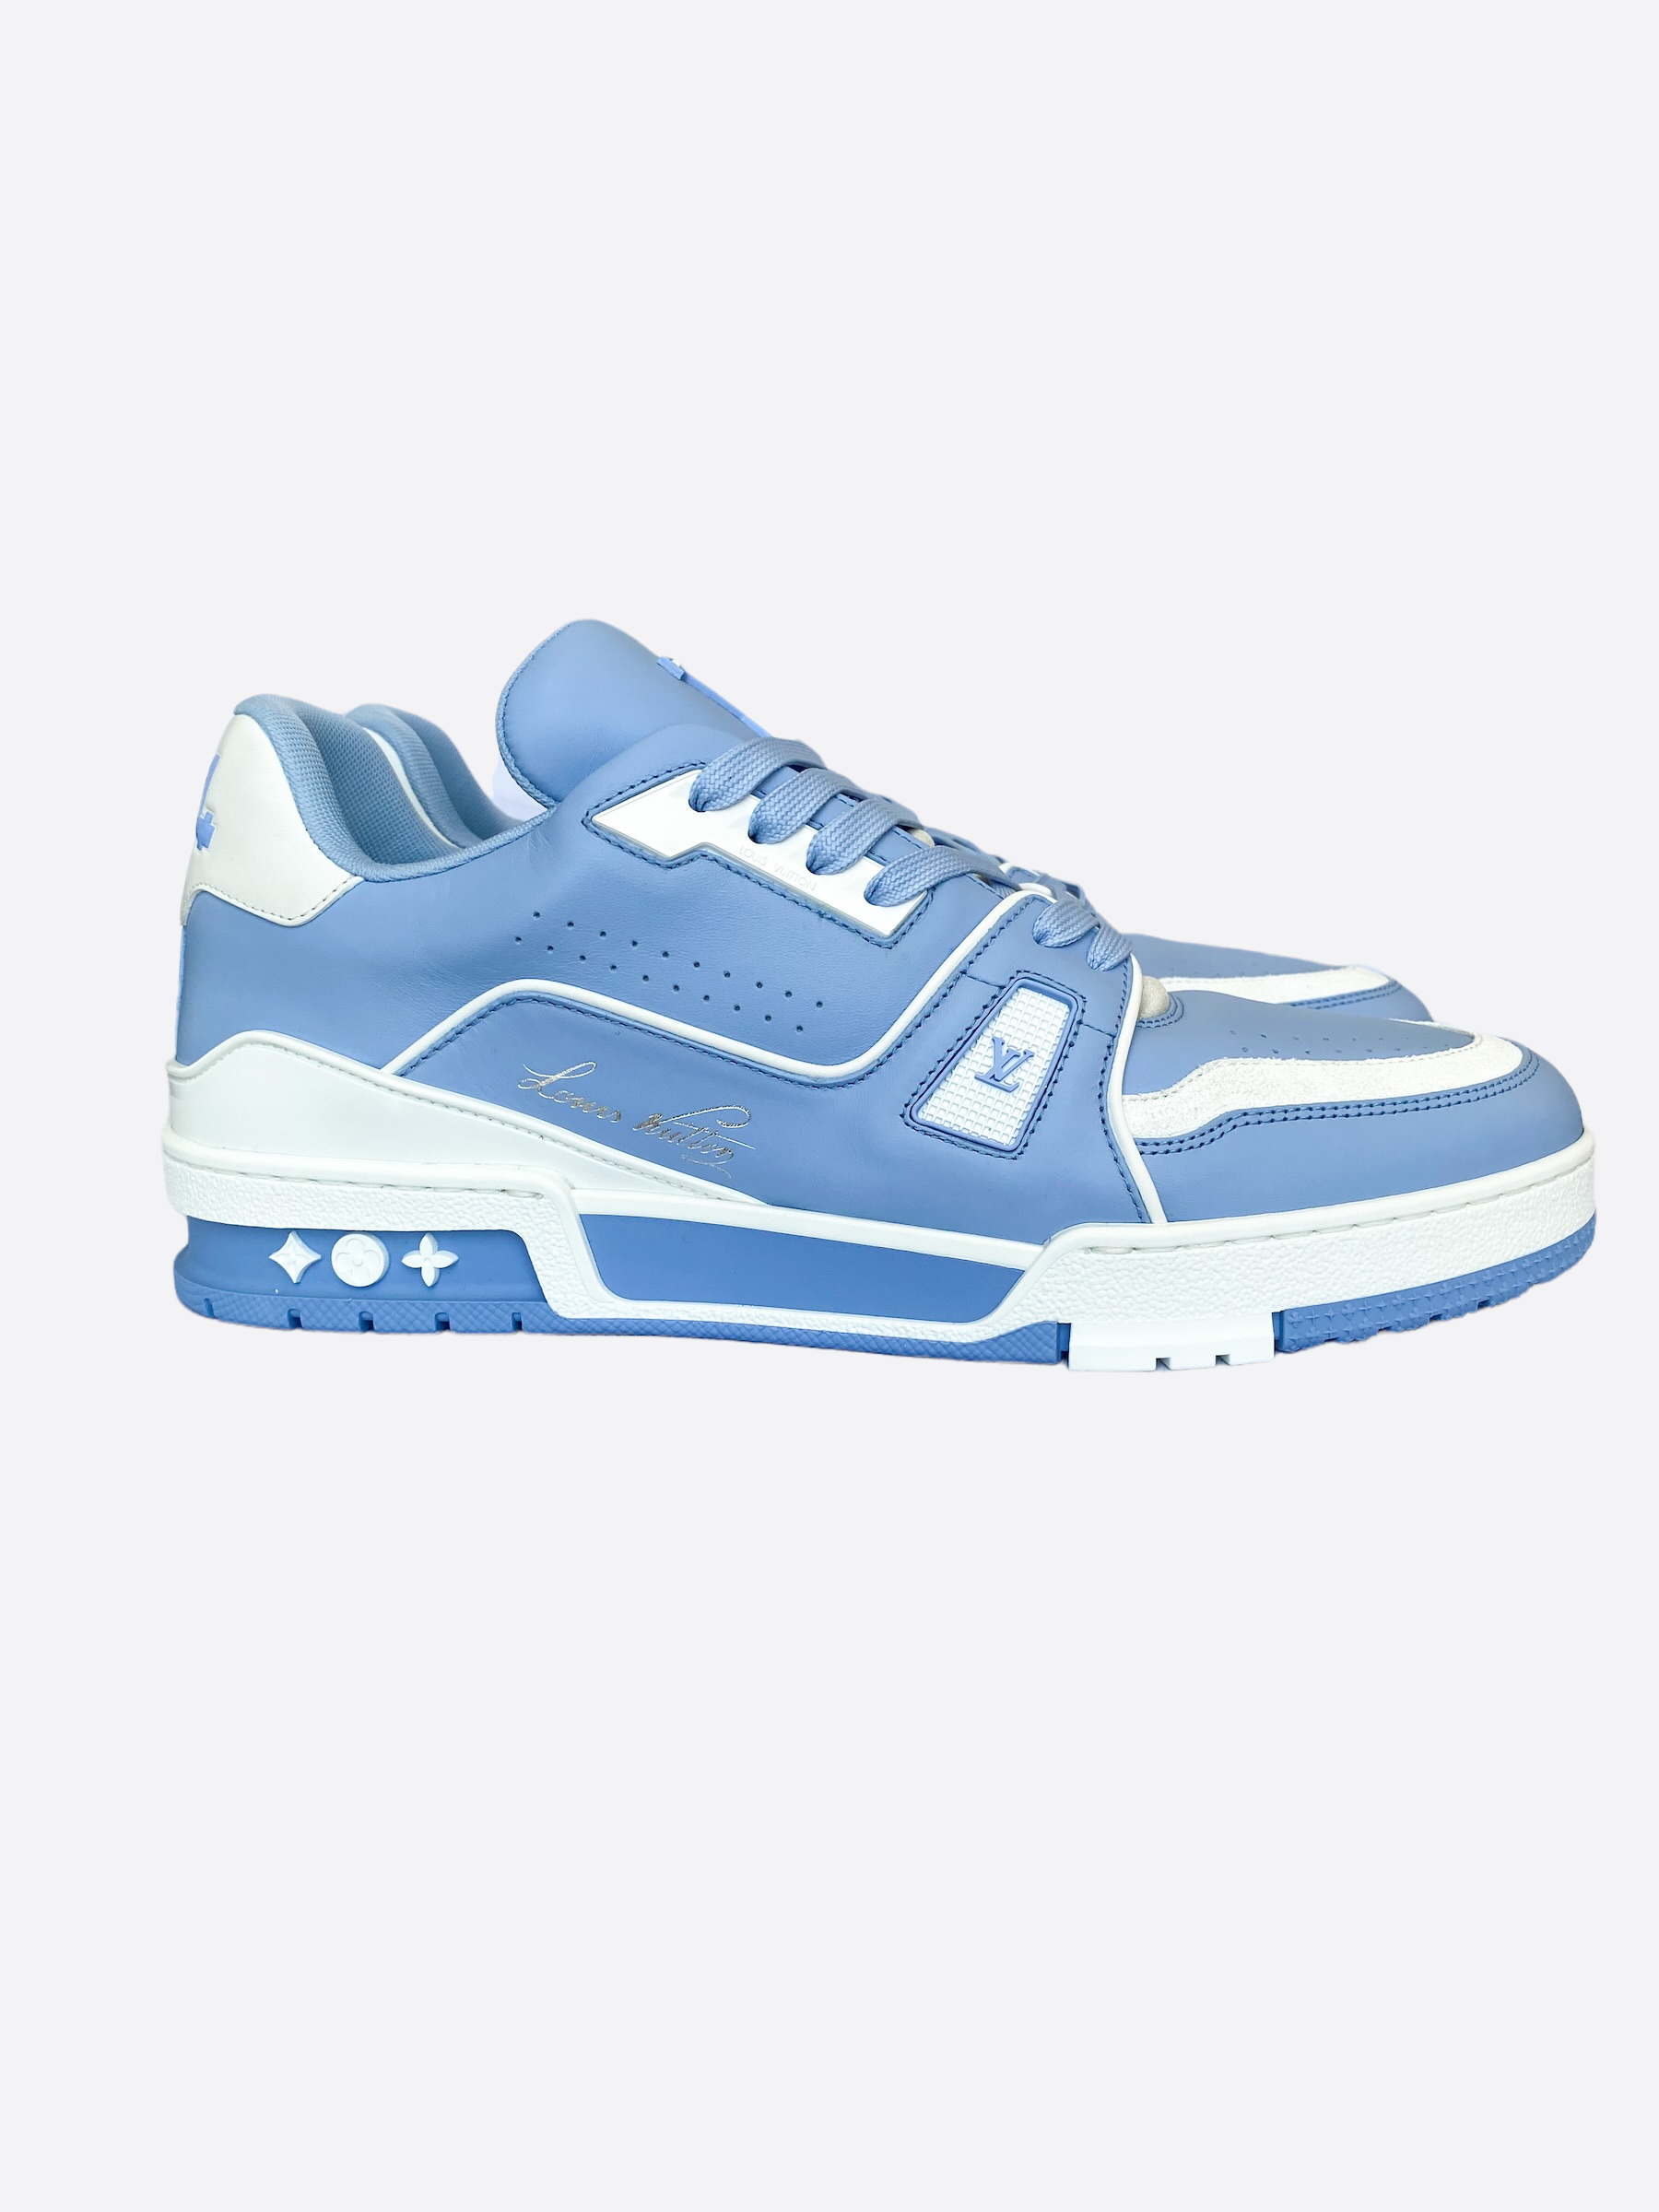 Louis Vuitton LV Trainer Sneaker in Blue